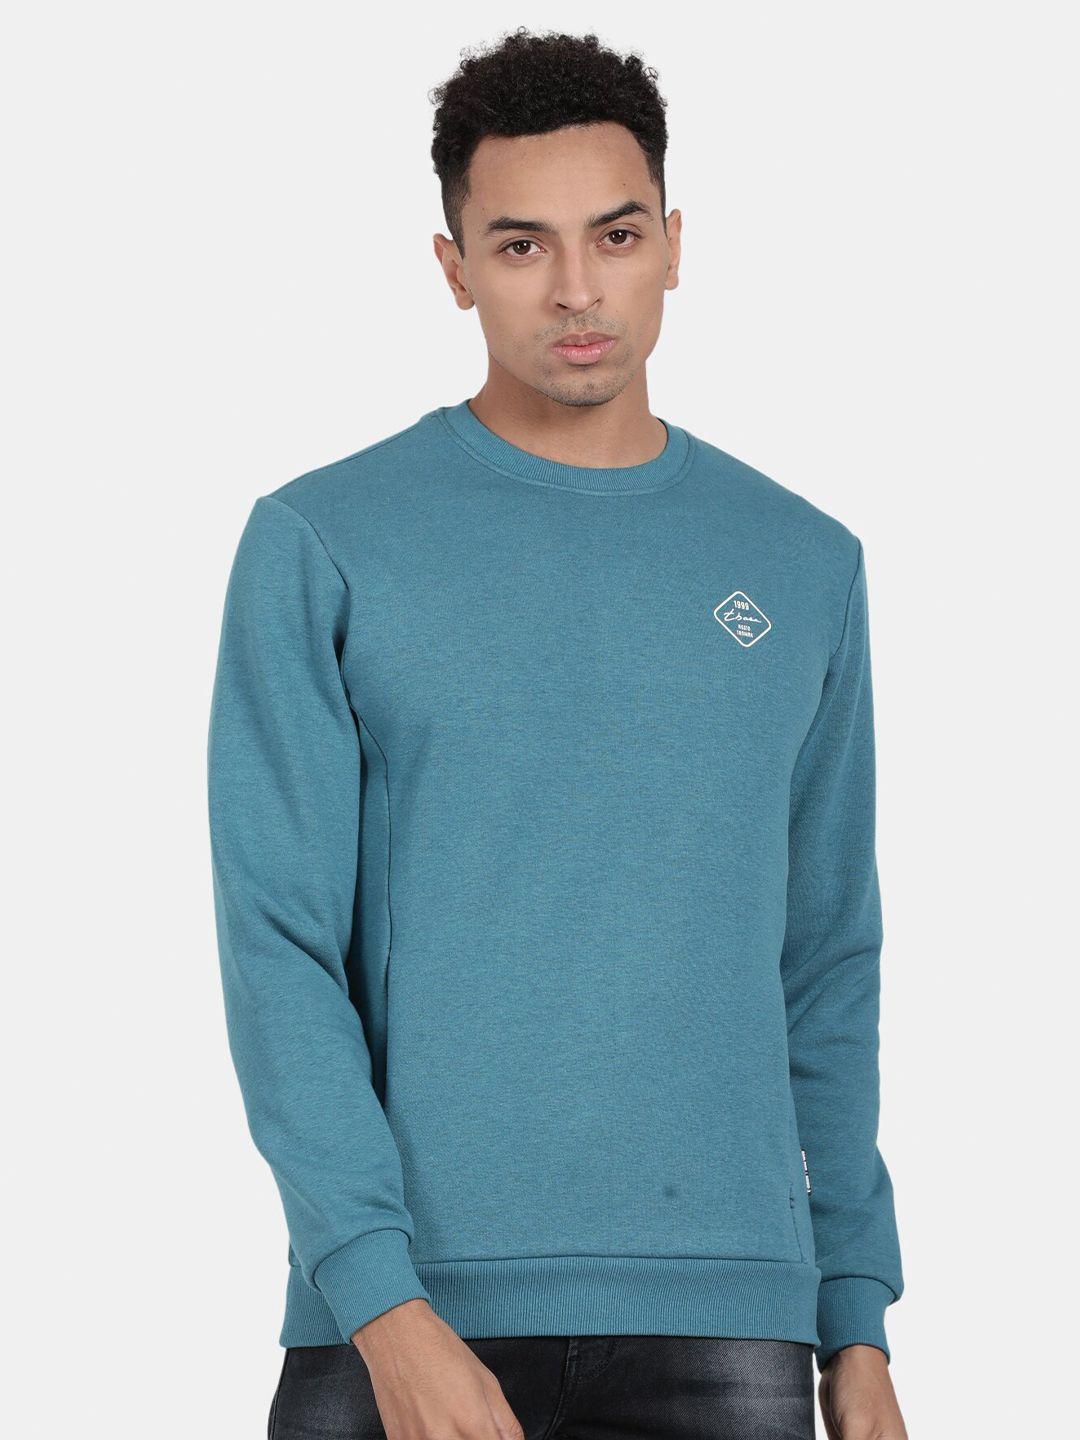 t-base-round-neck-knitted-pullover-sweatshirt